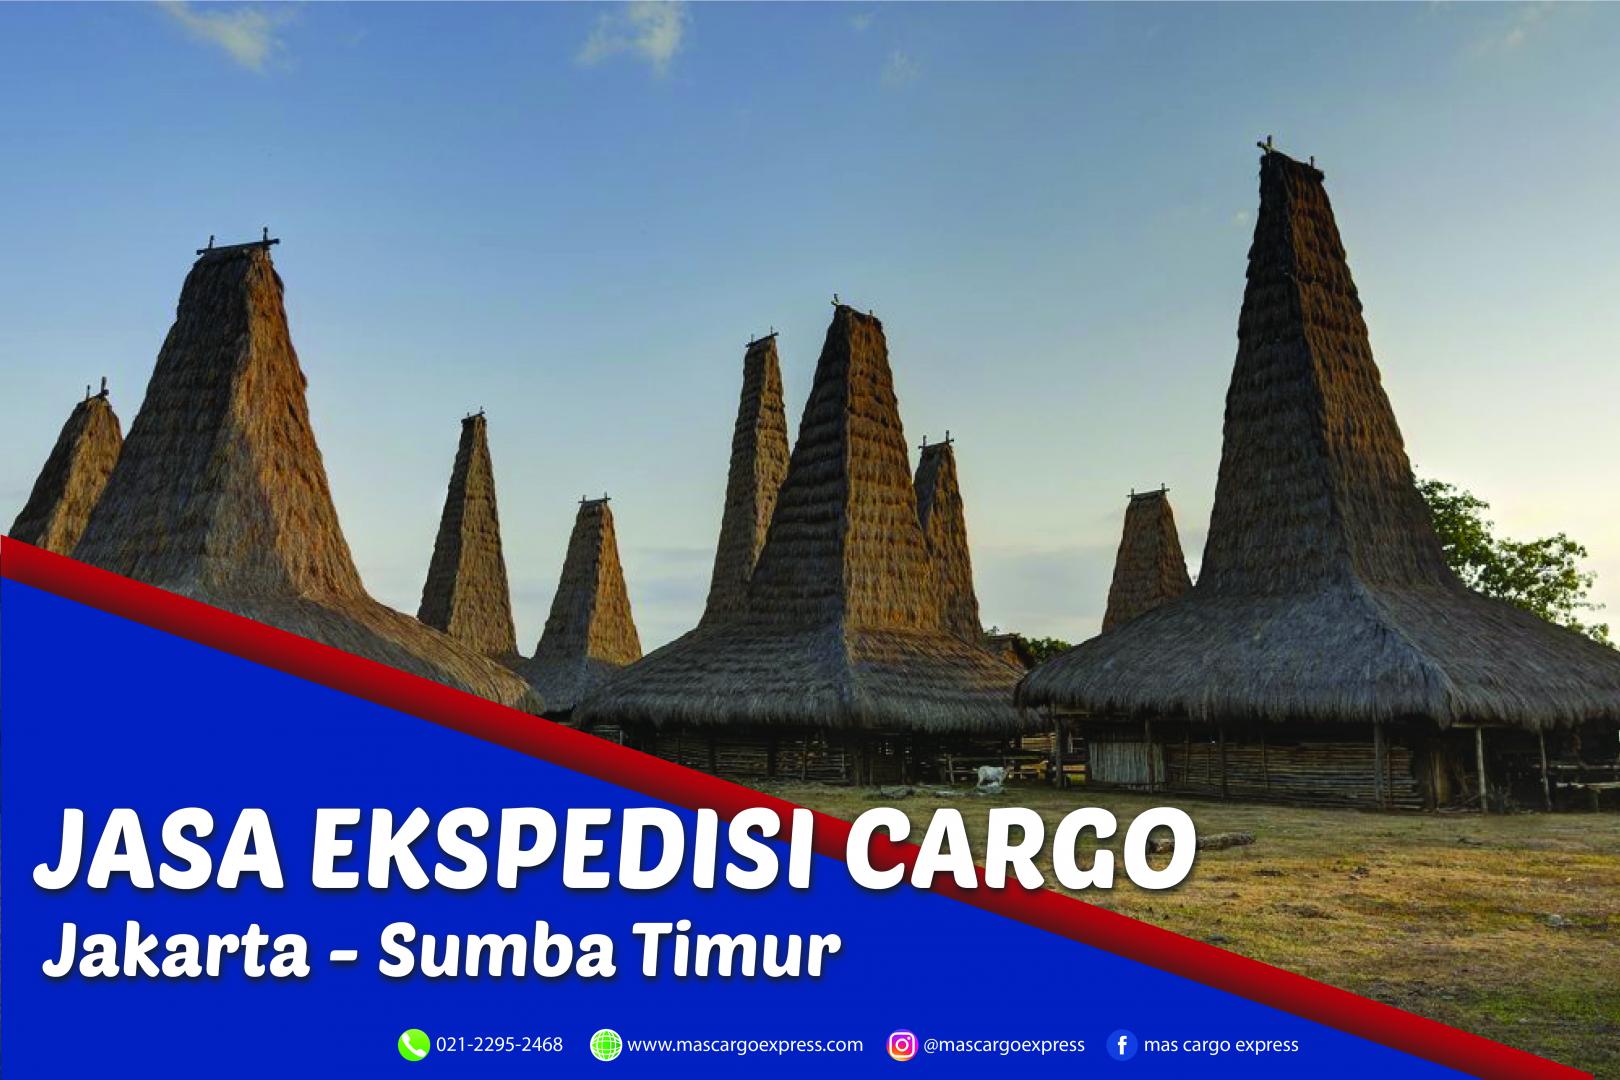 Jasa Ekspedisi Cargo Jakarta ke Sumba Timur Murah, Cepat, Aman & Bergaransi